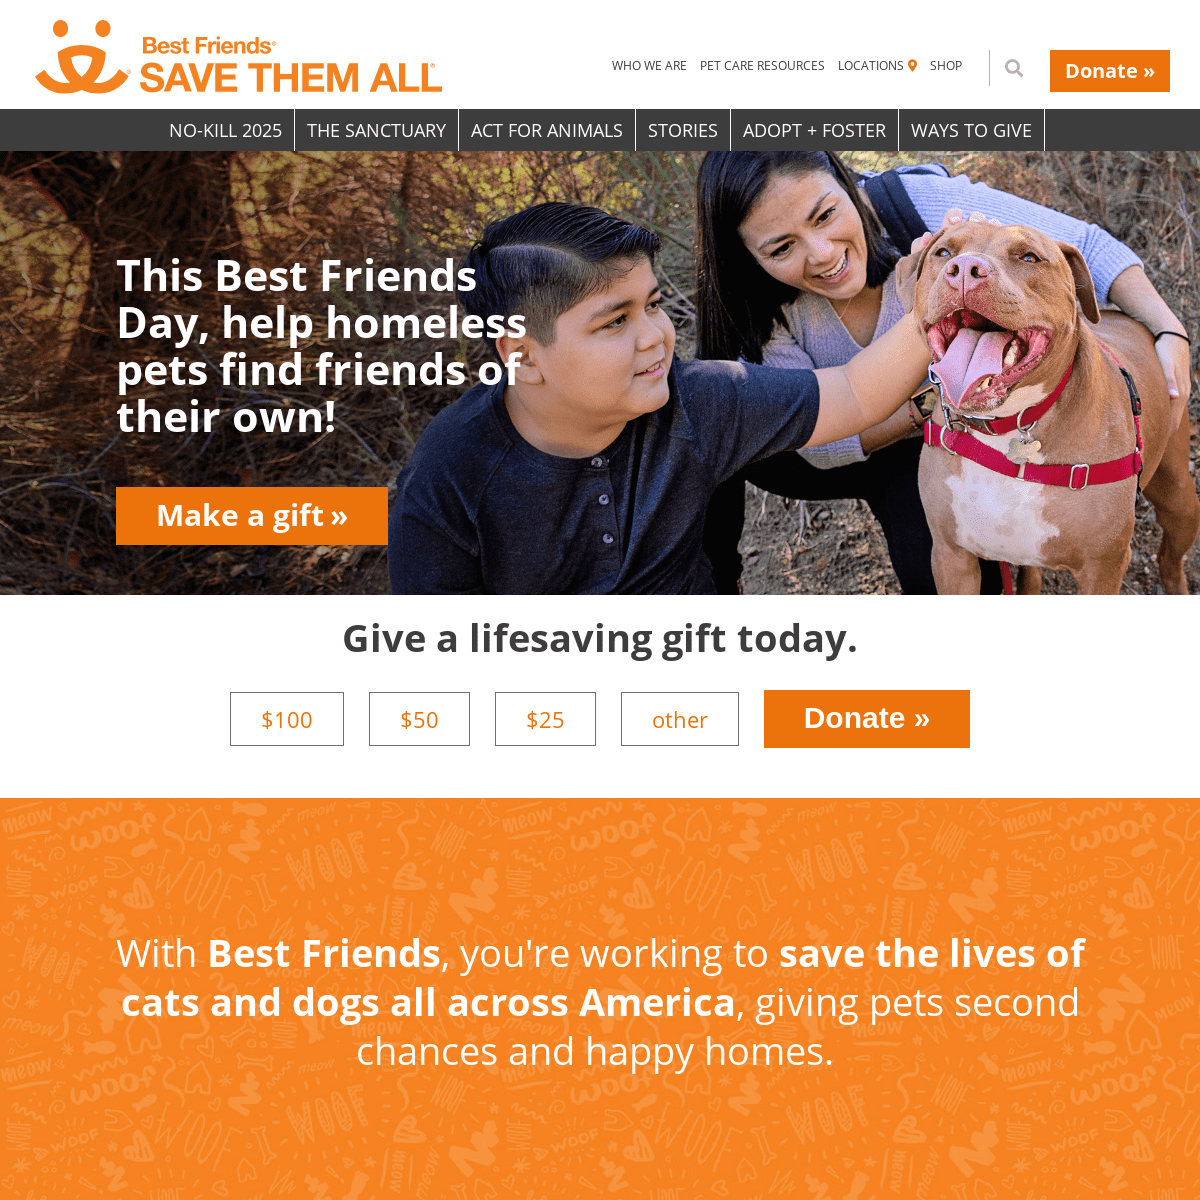 Best Friends Animal Society- No-Kill Animal Rescue & Advocacy